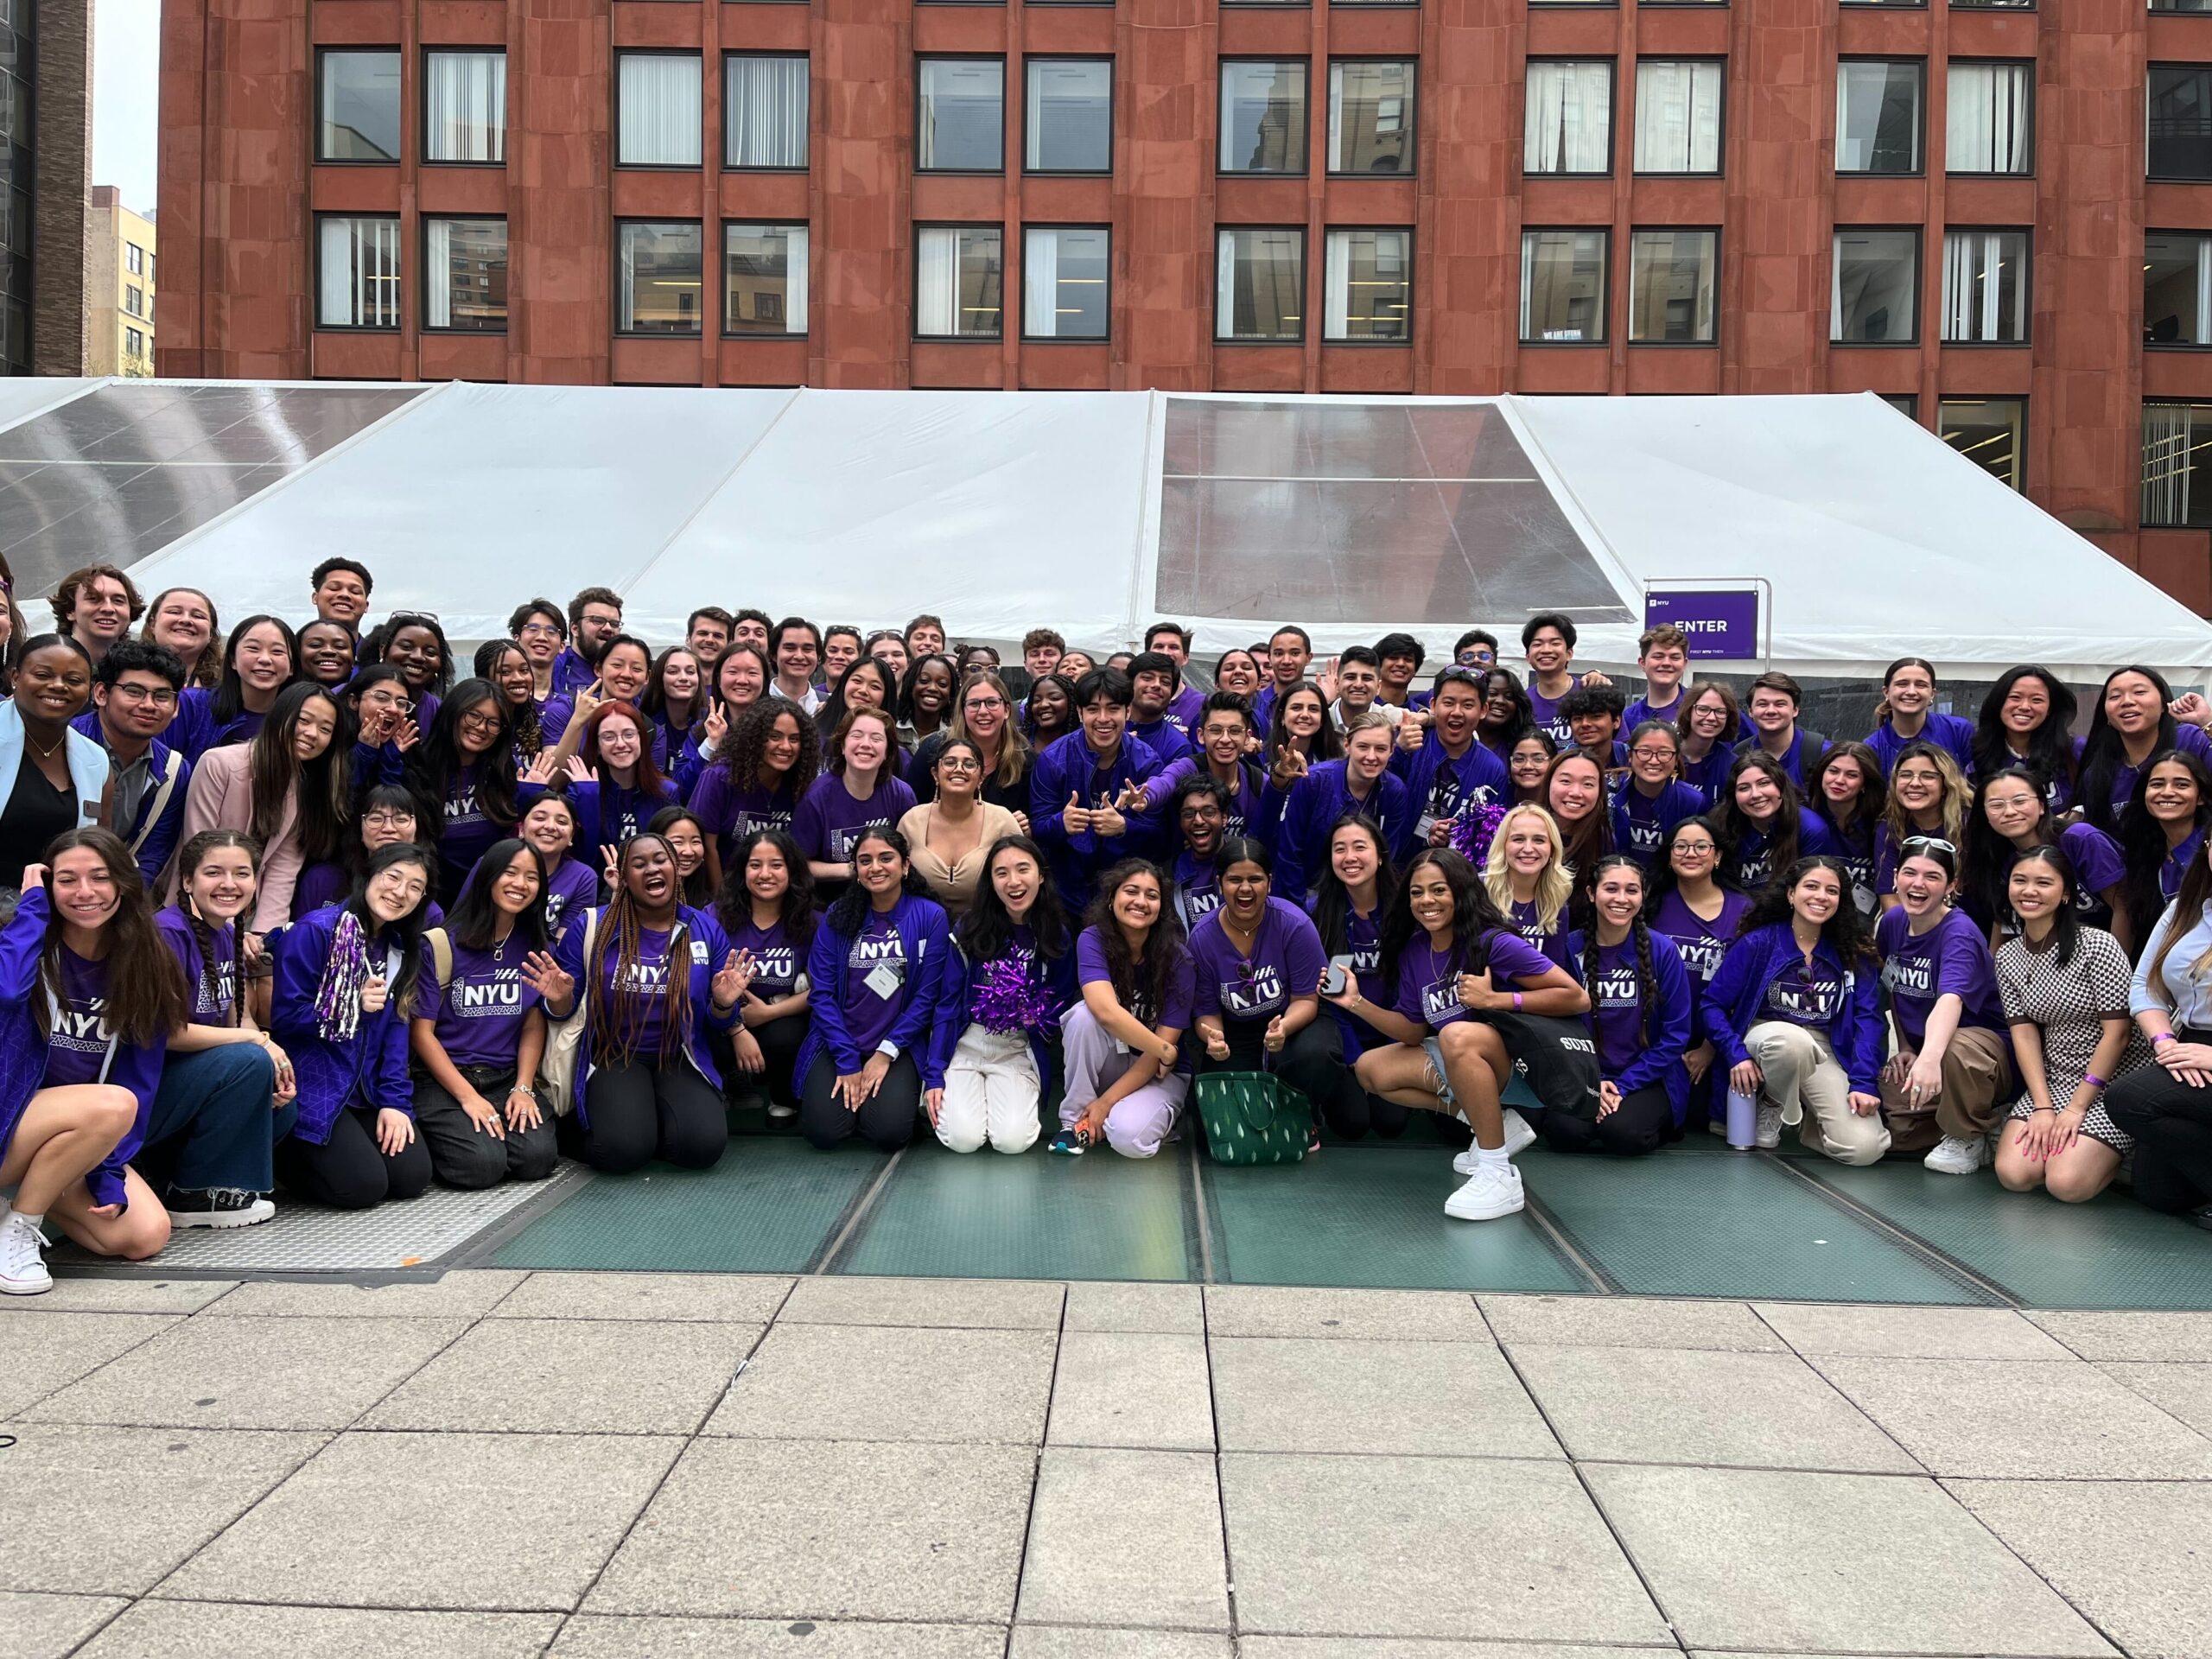 Many NYU Ambassadors gathered in Gould Plaza for a group photo